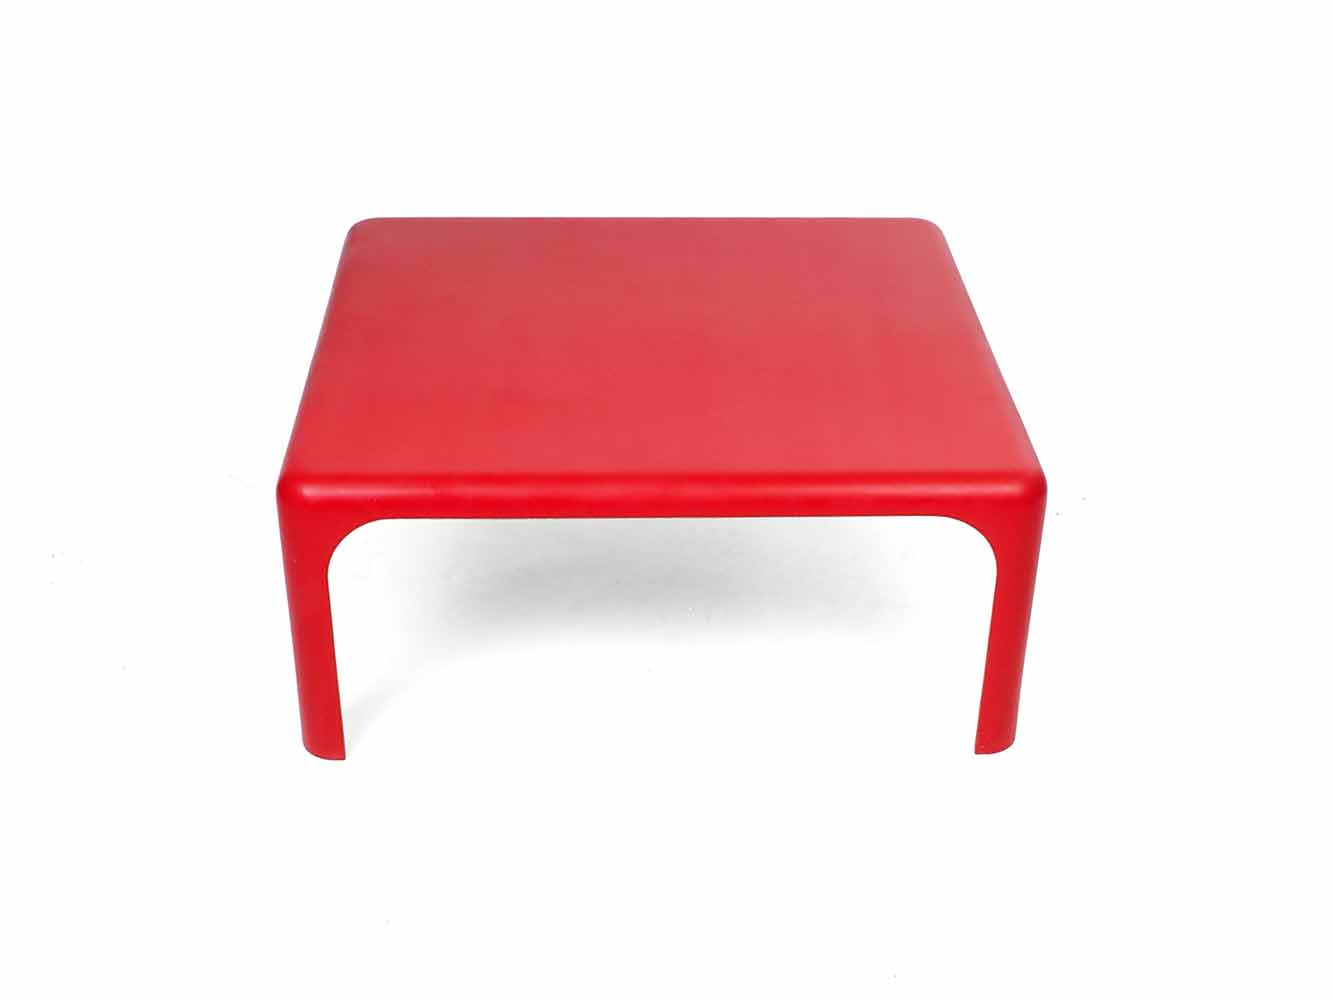 Magistretti - Artifort - Artemide red table